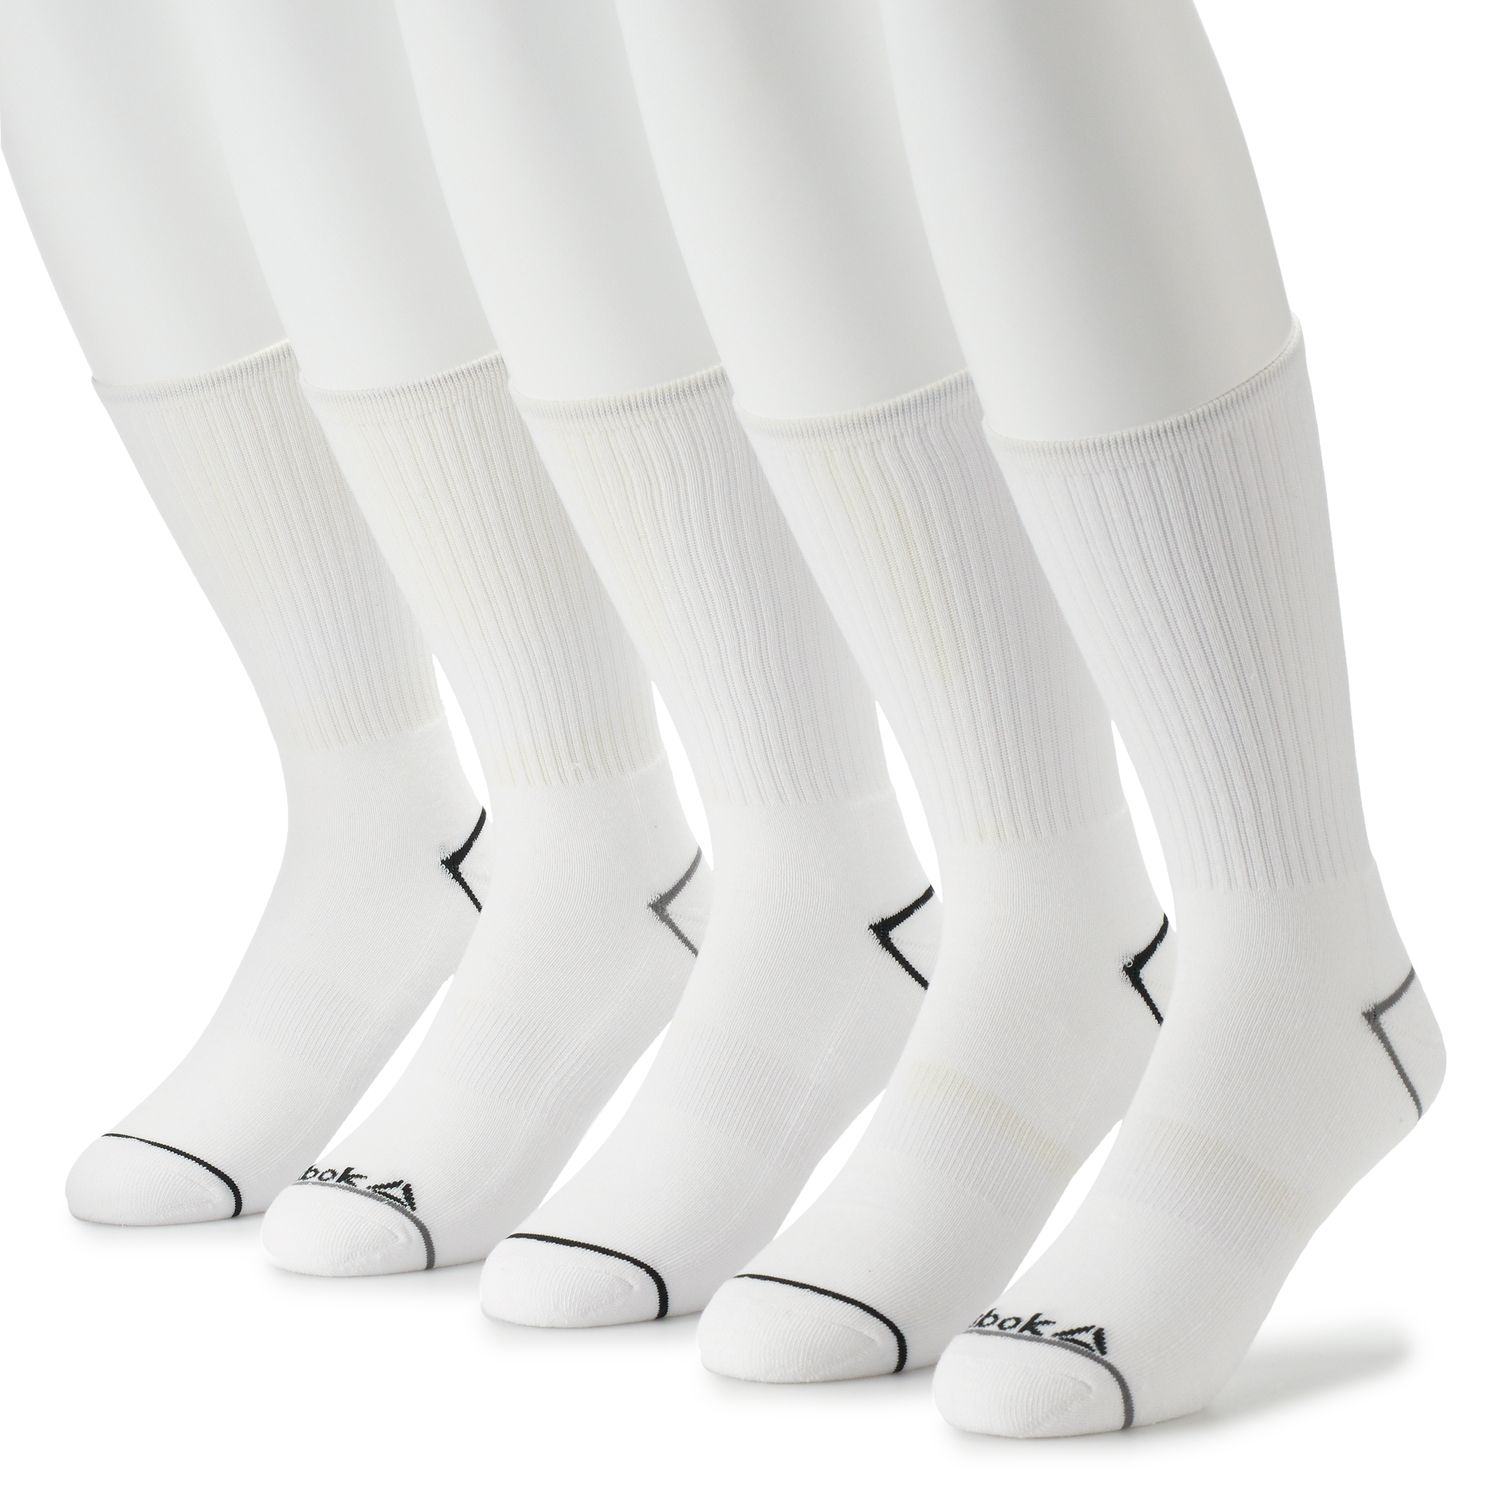 reebok men's crew socks